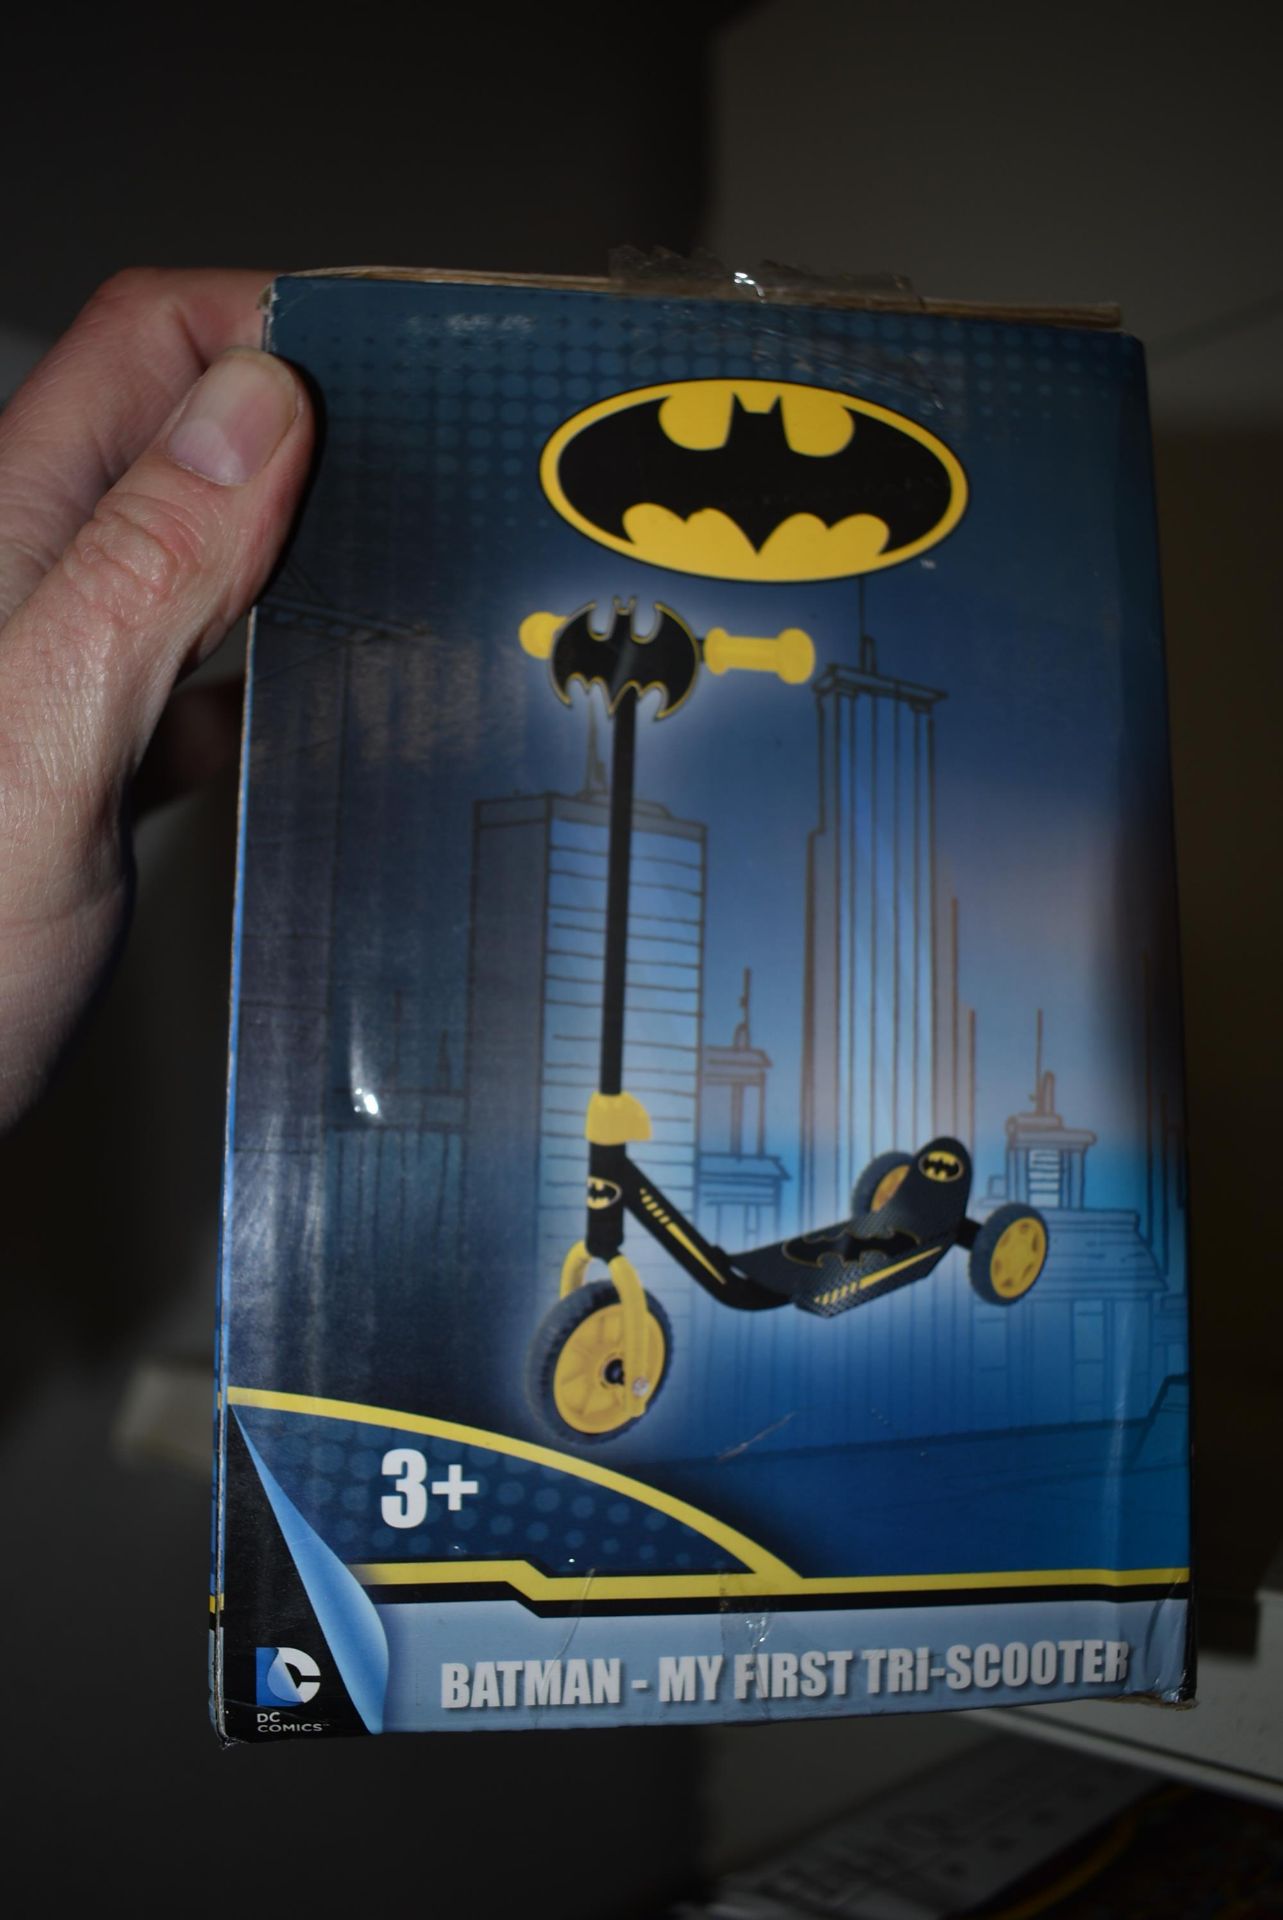 Batman Tri-Scooter - Image 3 of 4